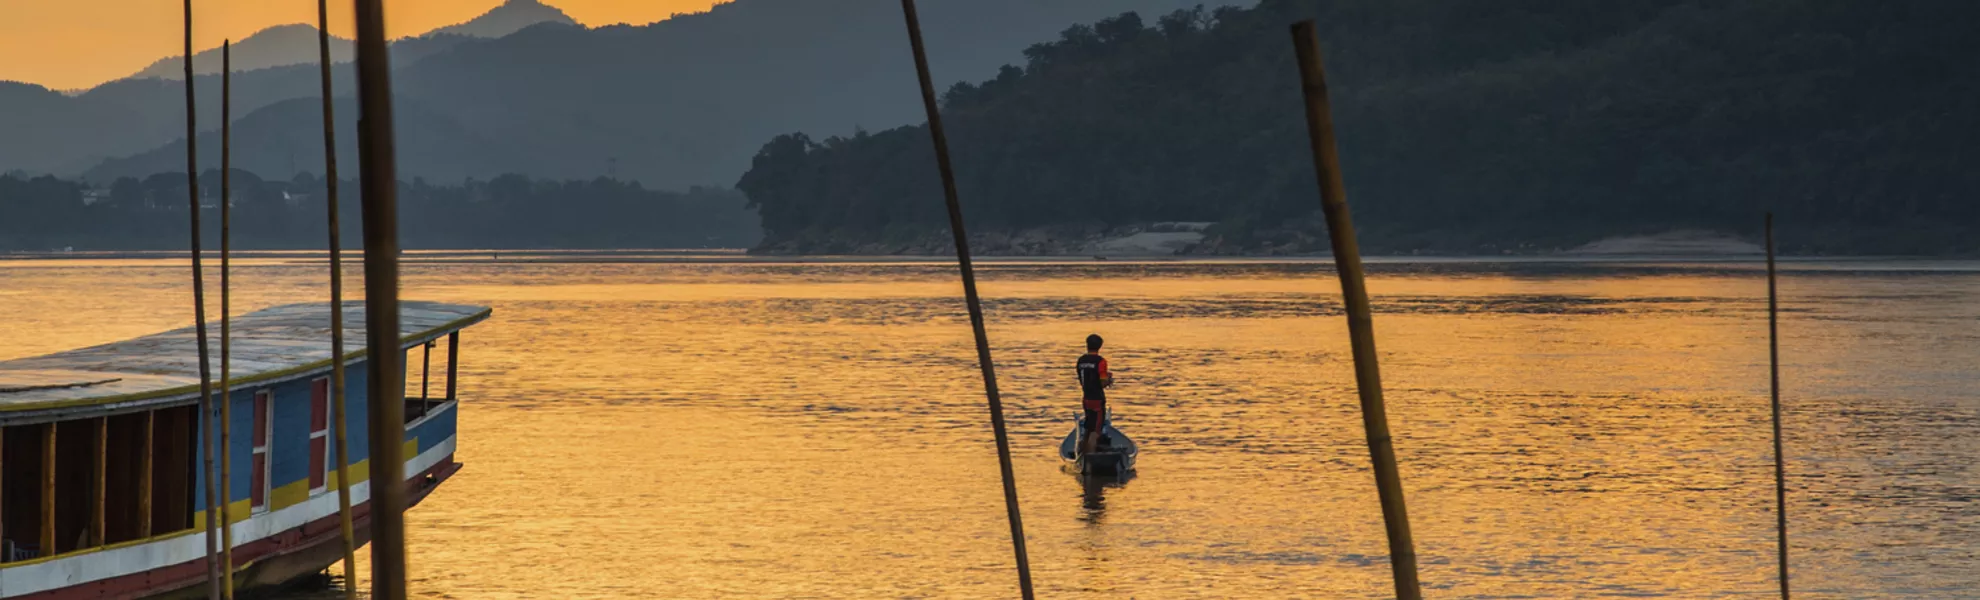 Am Mekong, Laos - © filmlandscape - Fotolia